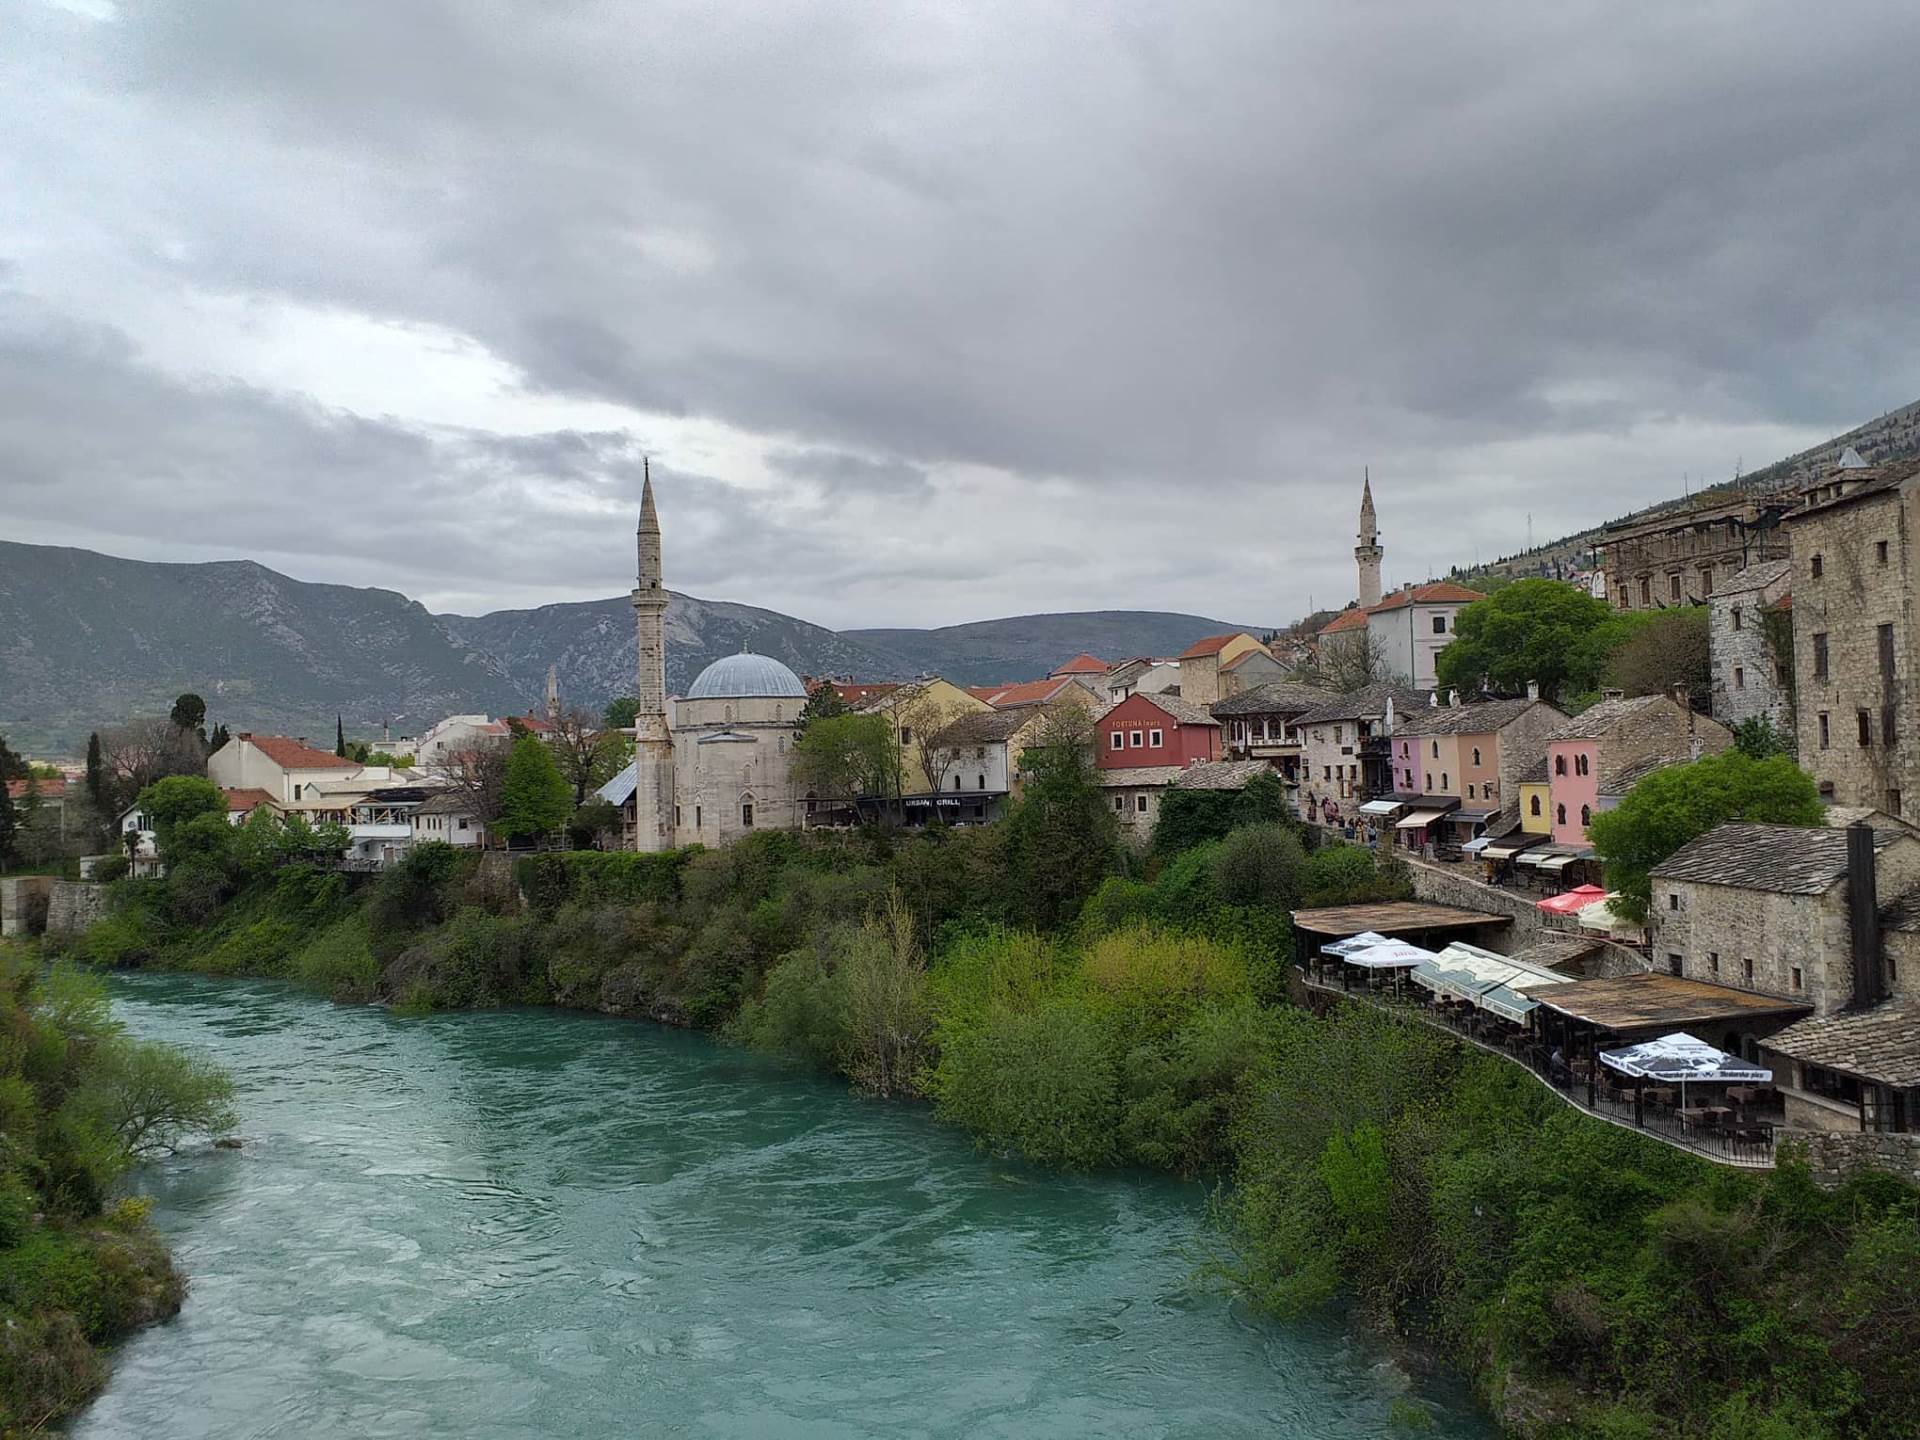  Mostar: Nakon eksplozije napadnuta novinarka 